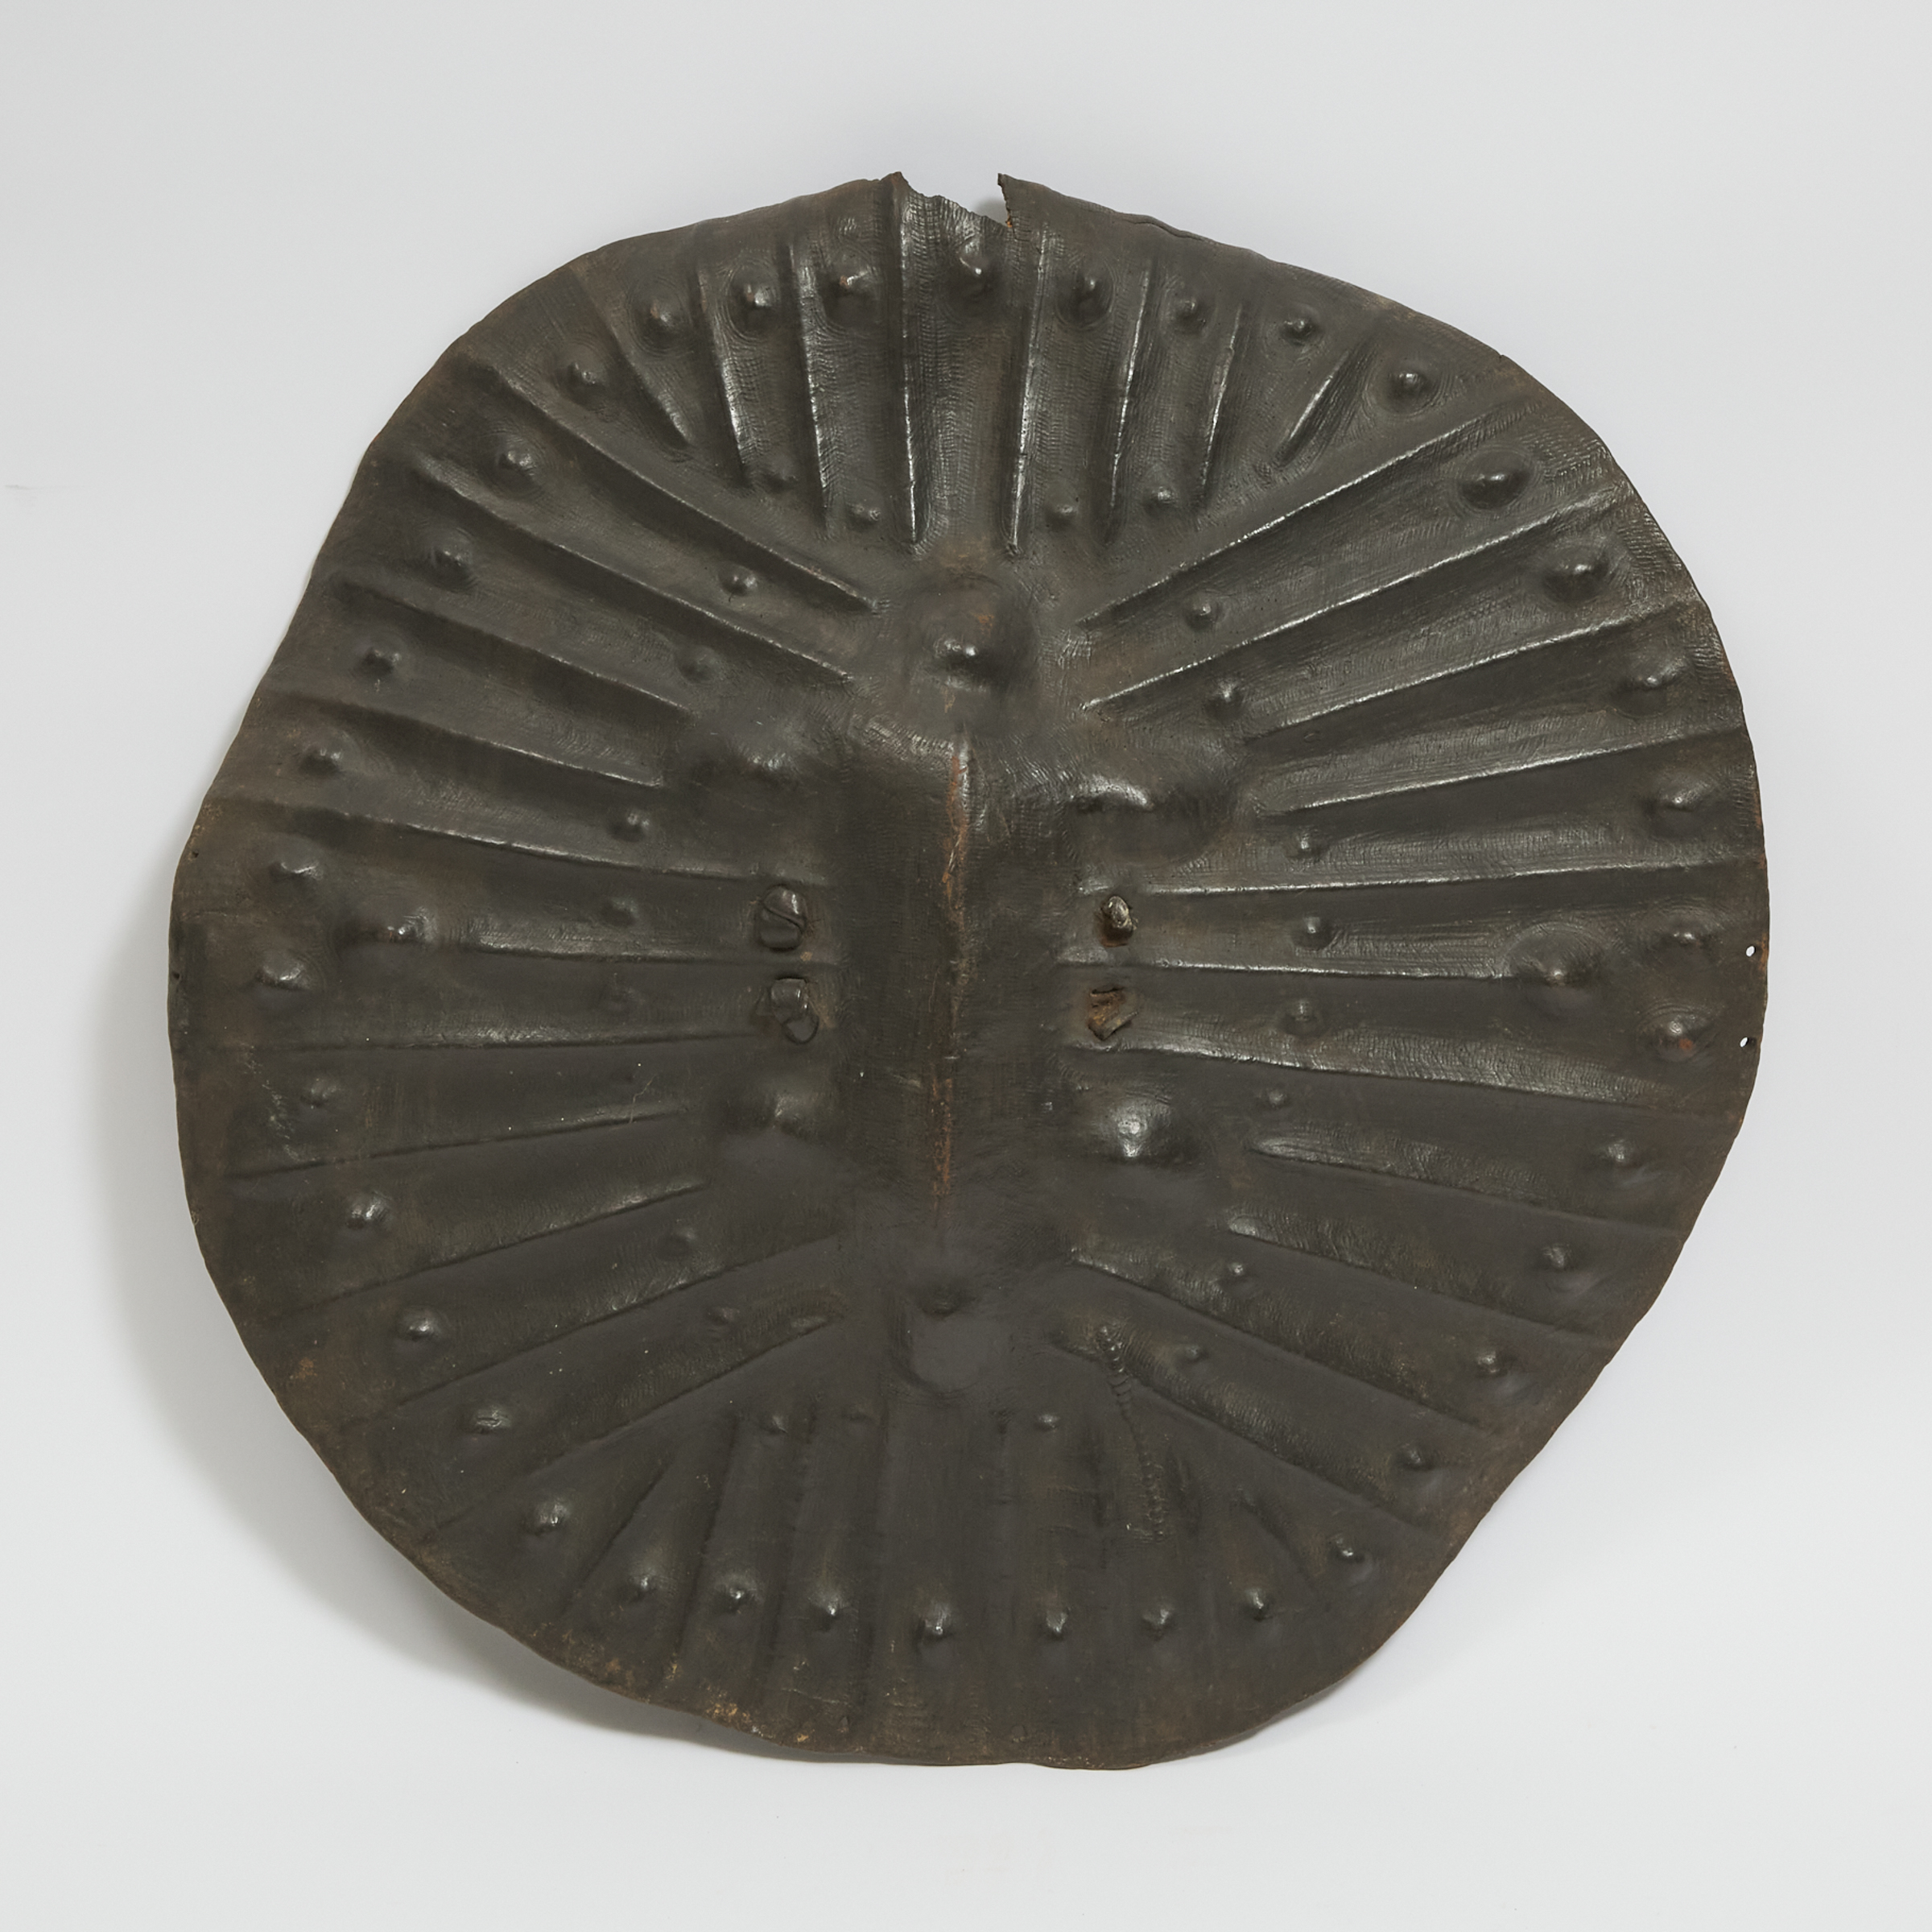 Oromo Shield, Ethiopia, East Africa, 19th/20th century